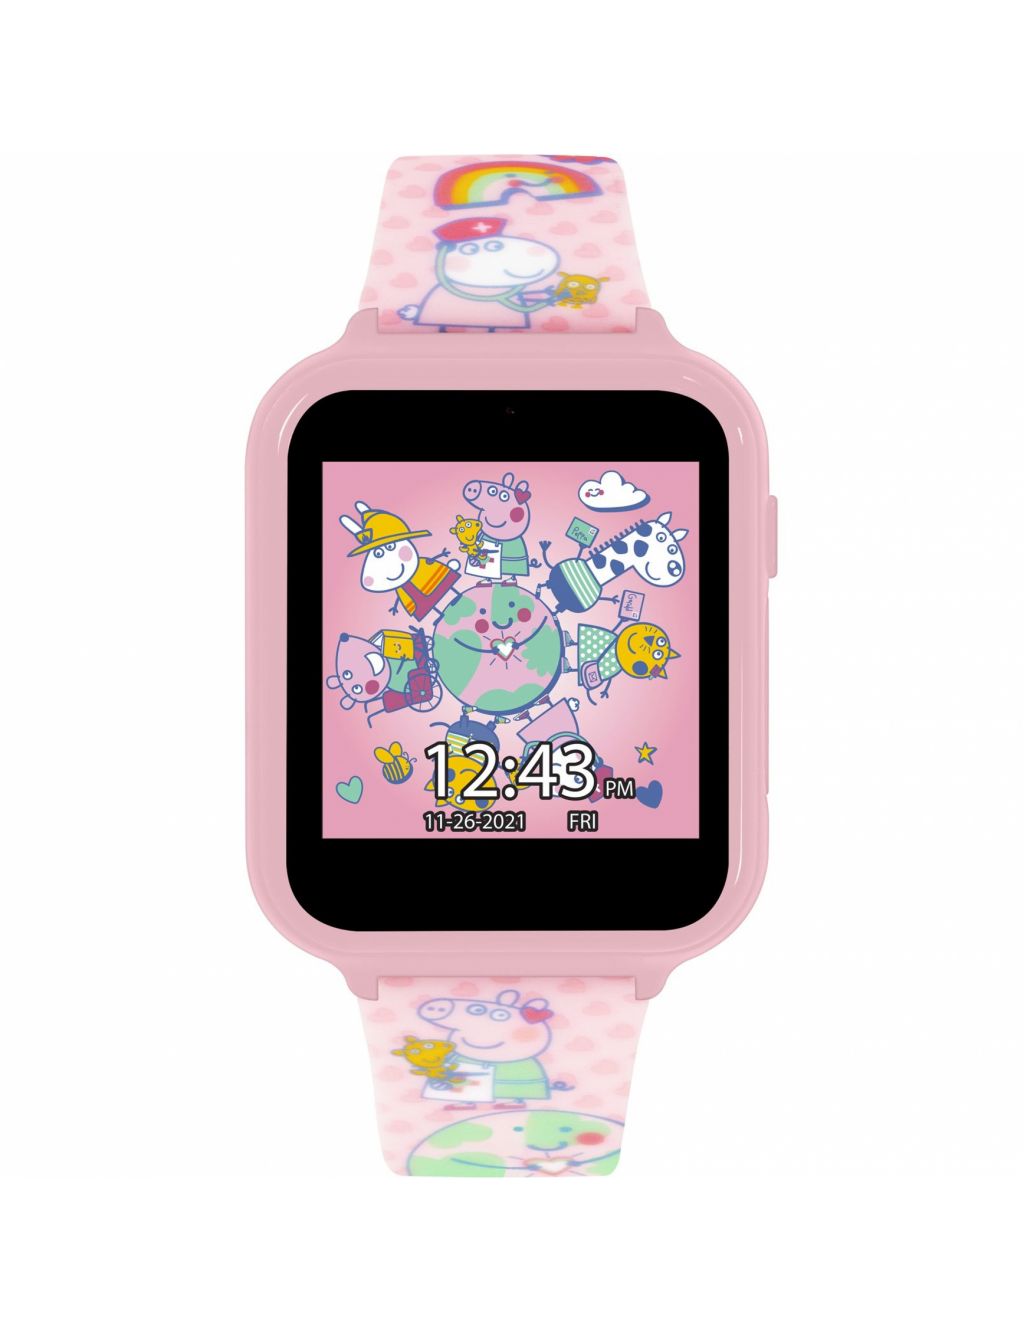 Peppa Pig™ Smartwatch image 1